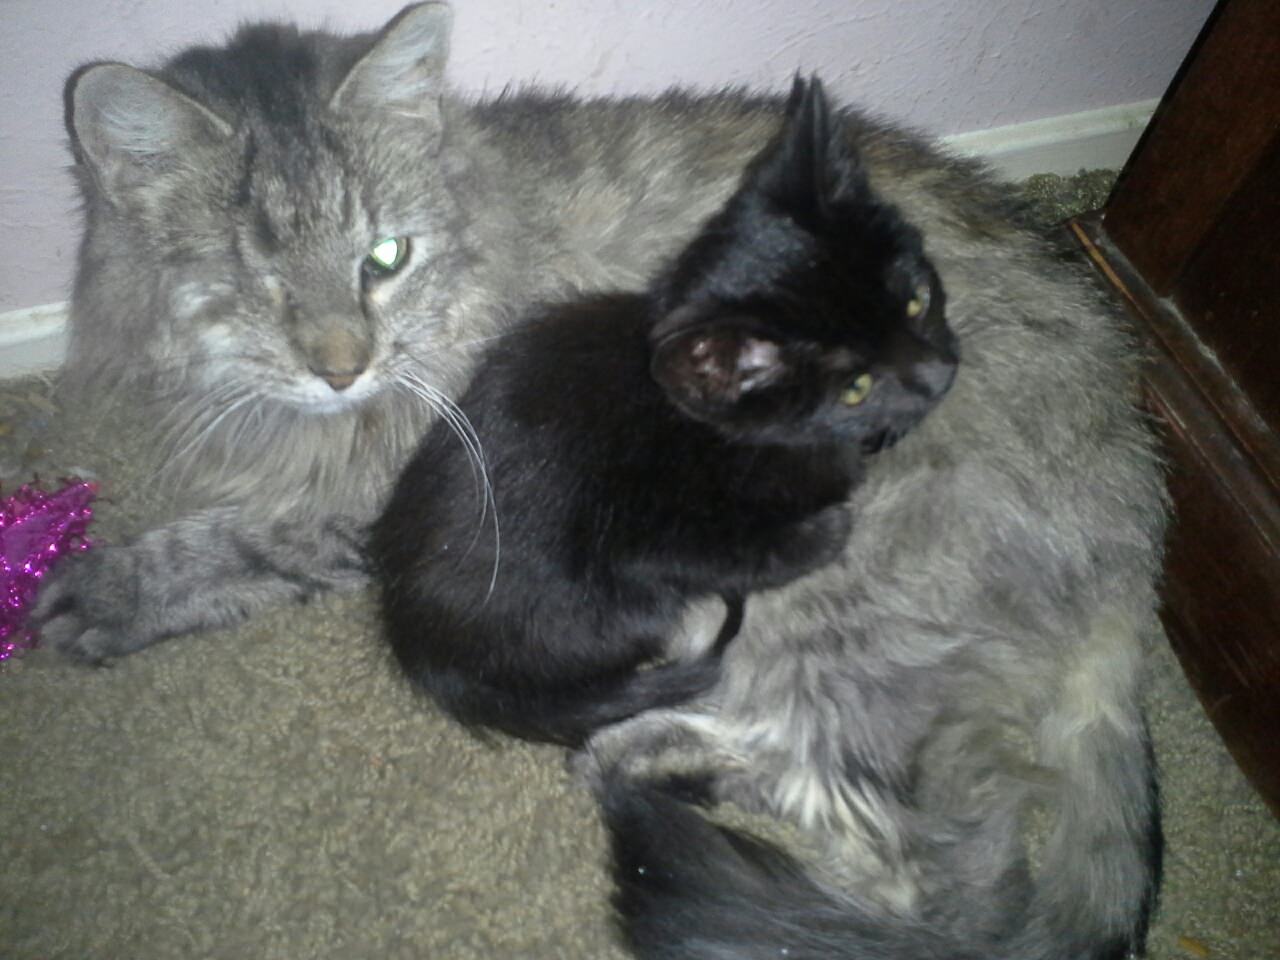 Serena and foster kitten